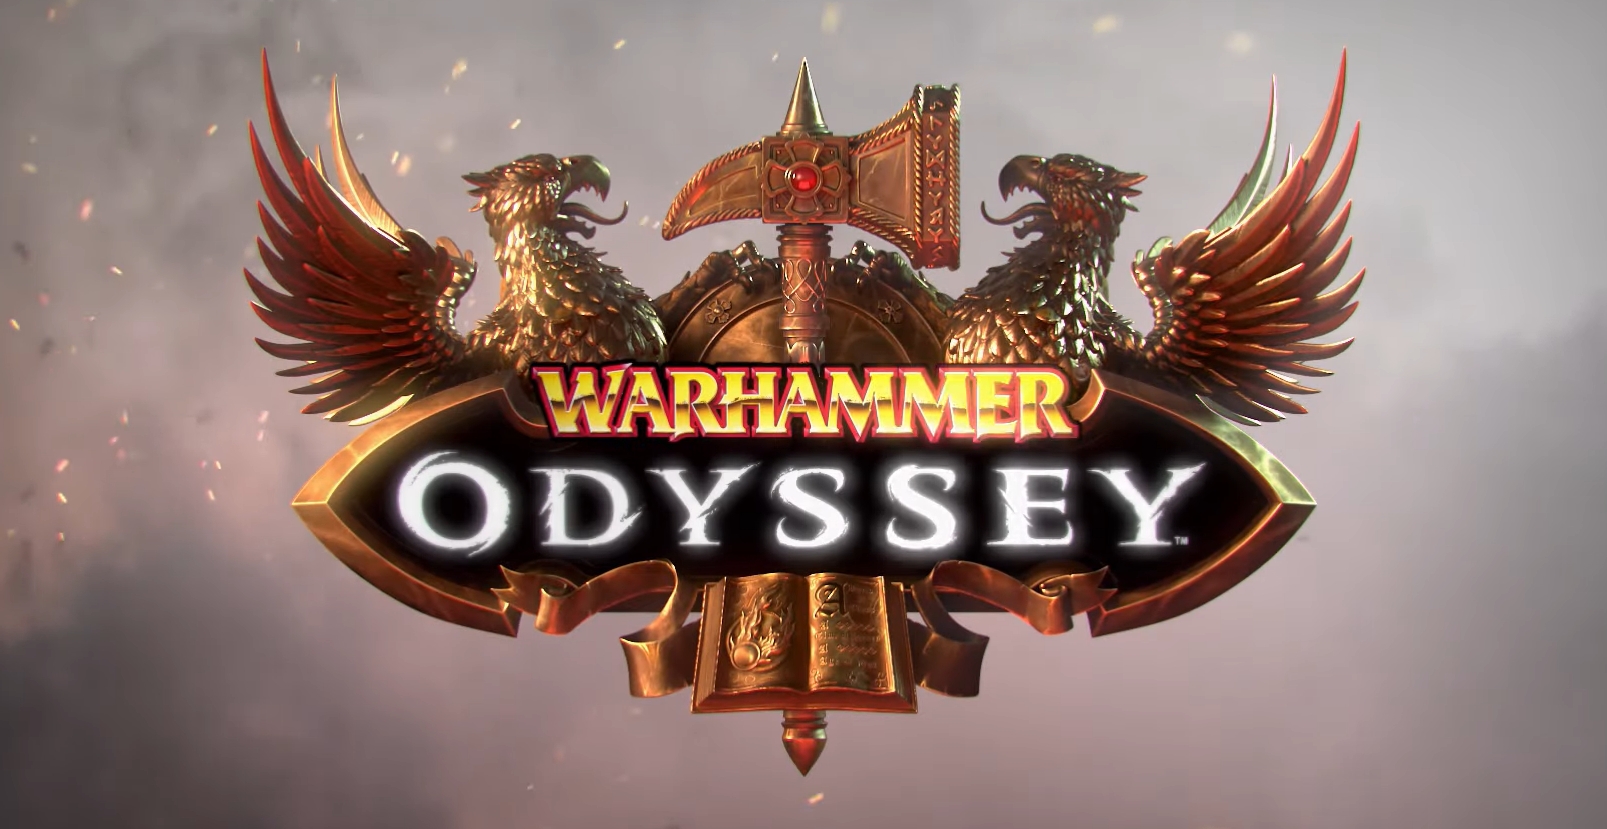 Warhammer Odyssey – Upcoming Mobile MMORPG’s New Trailer Revealed